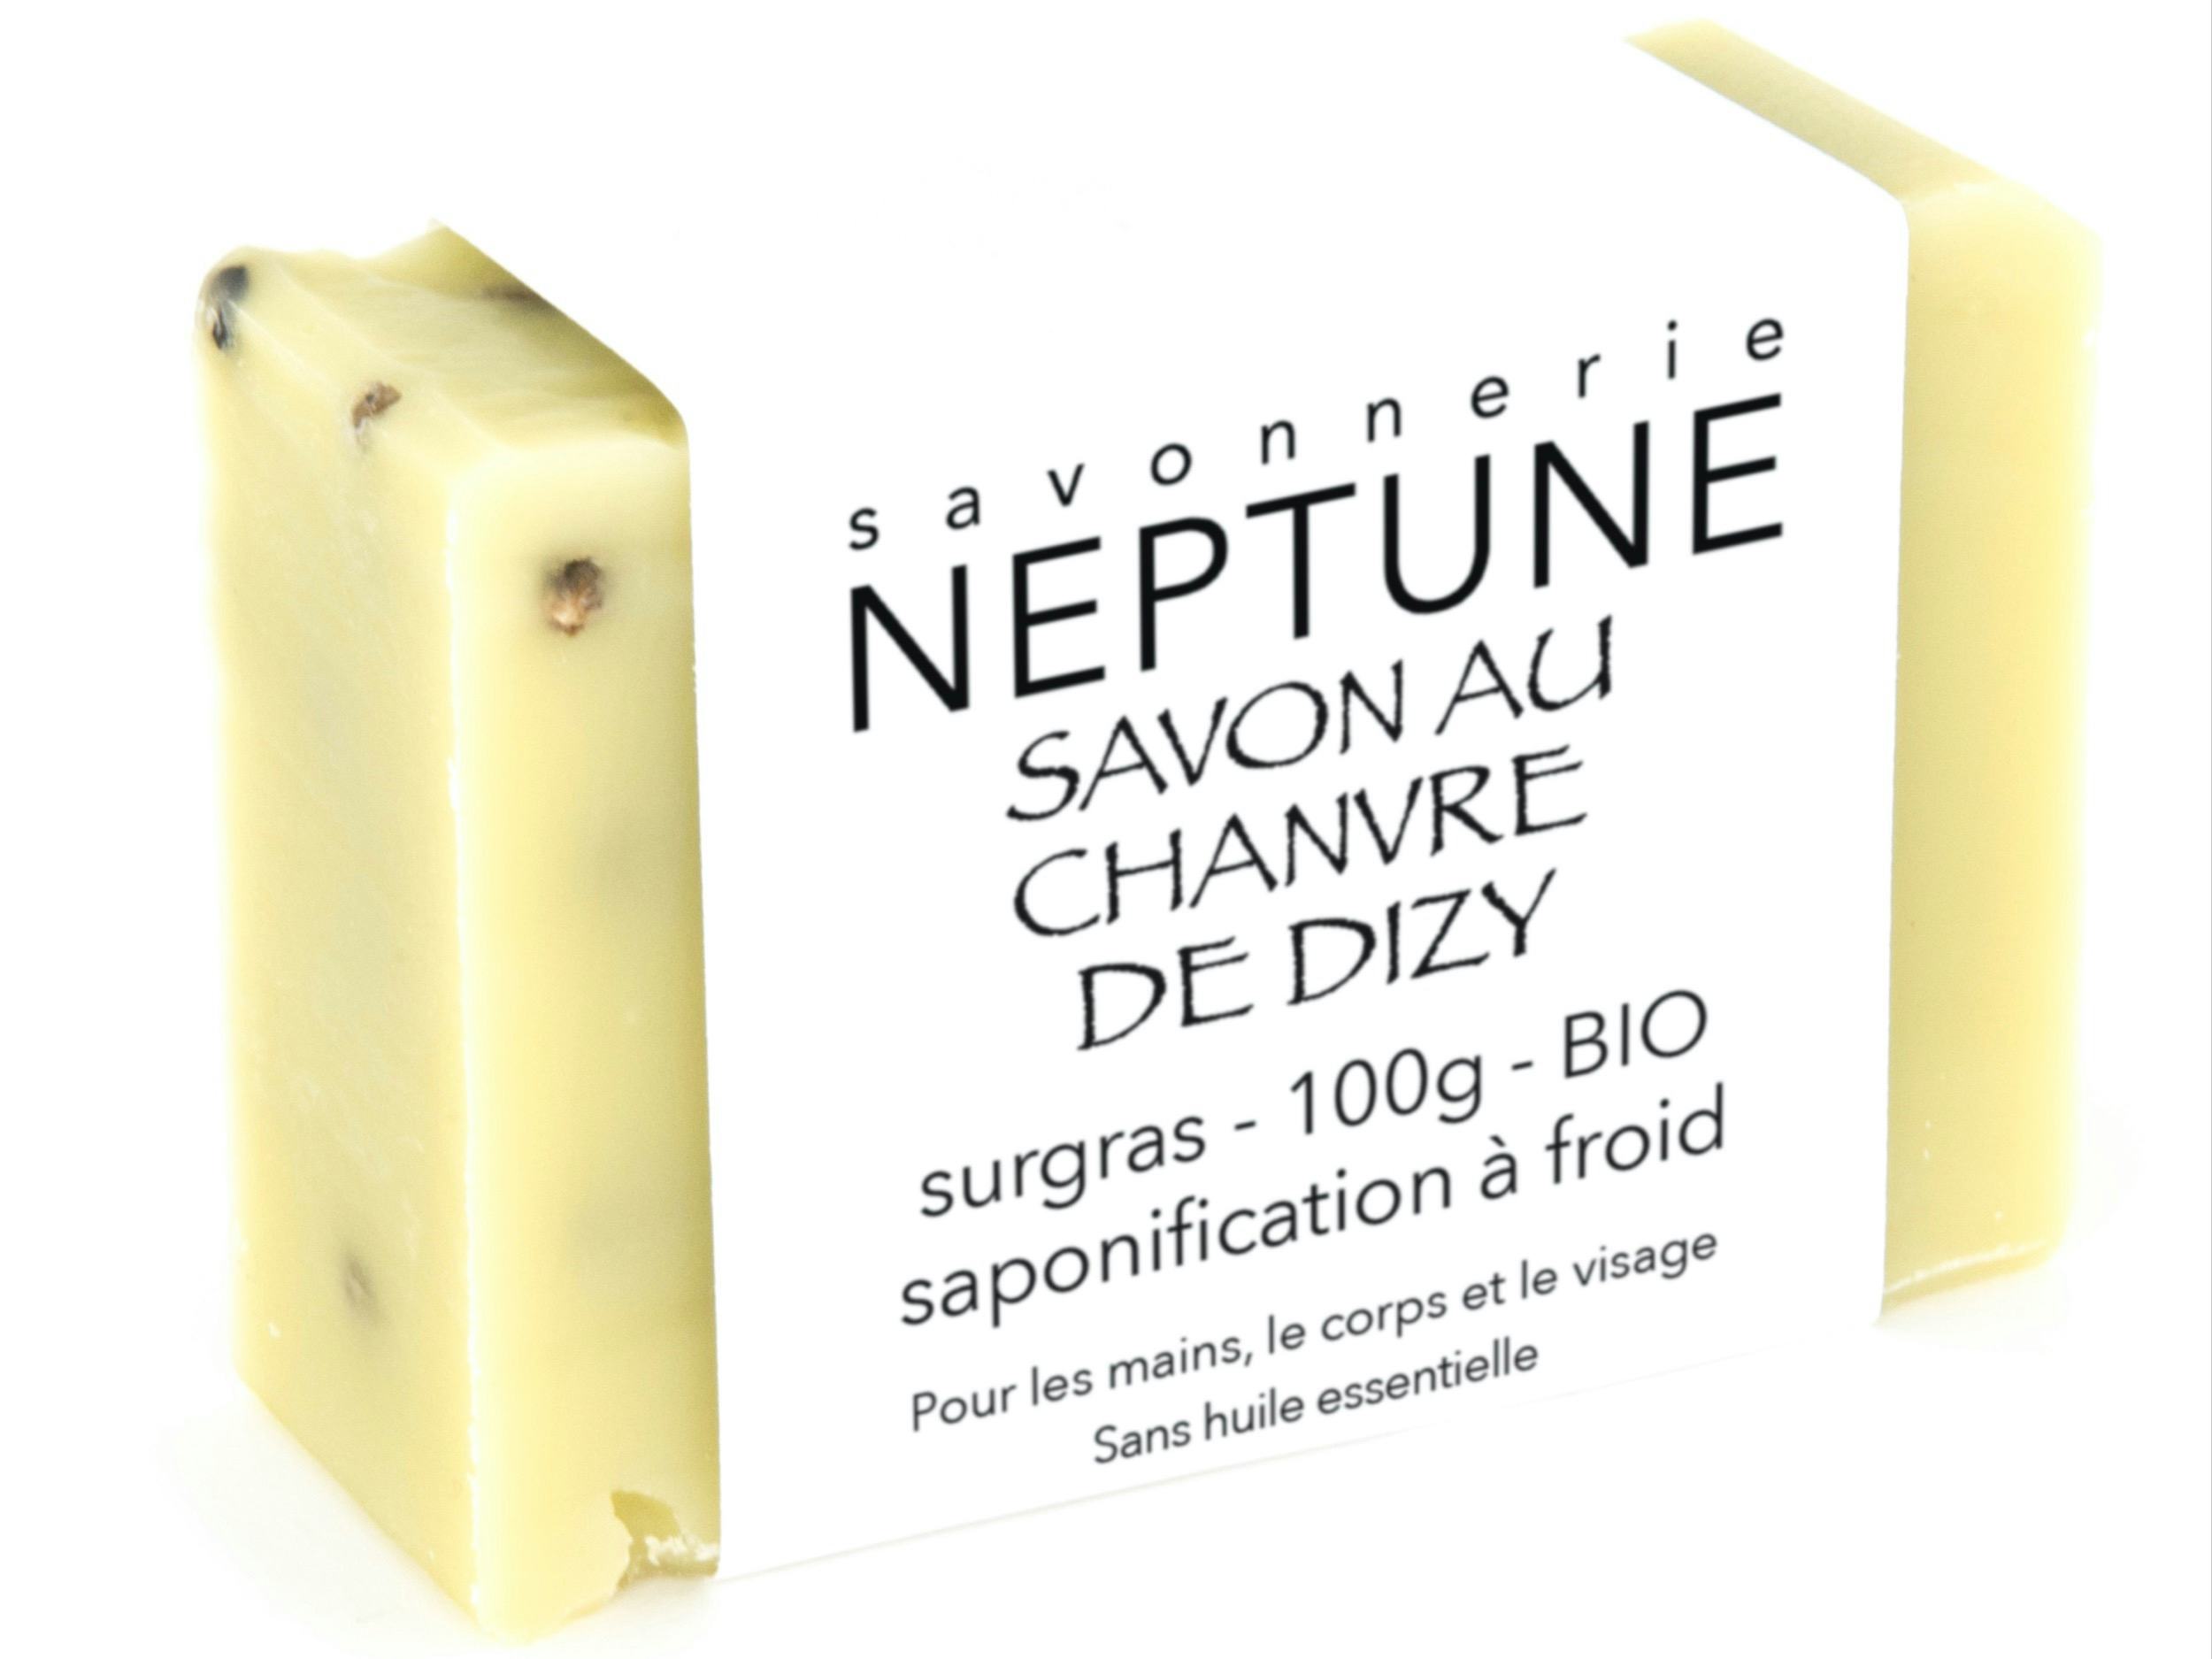 Hemp soap from Dizy - organic, Savonnerie NEPTUNE, Crésuz, image 2 | Mimelis